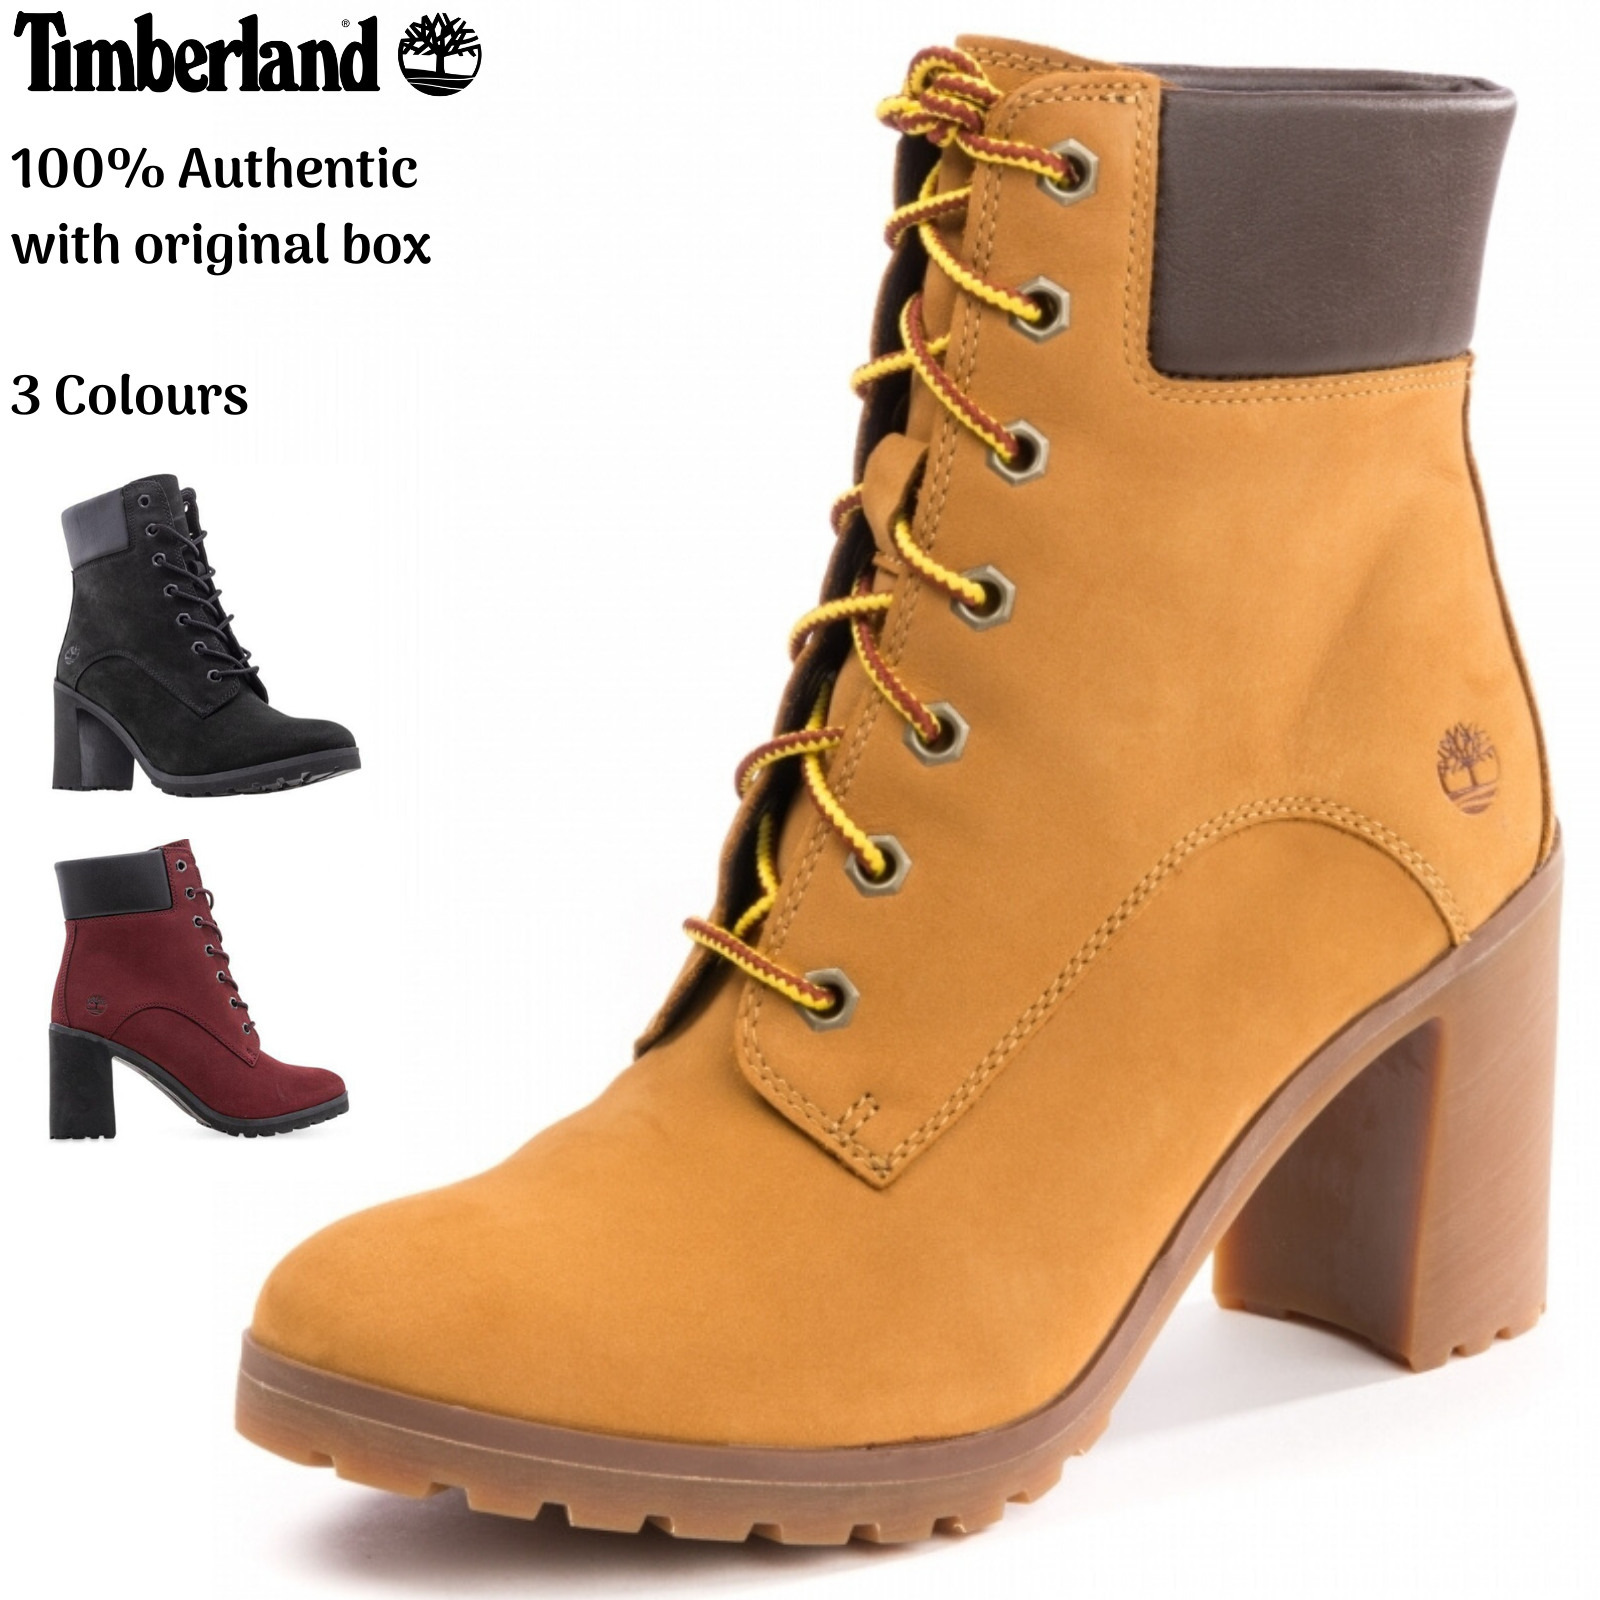 timberland allington boots khaki